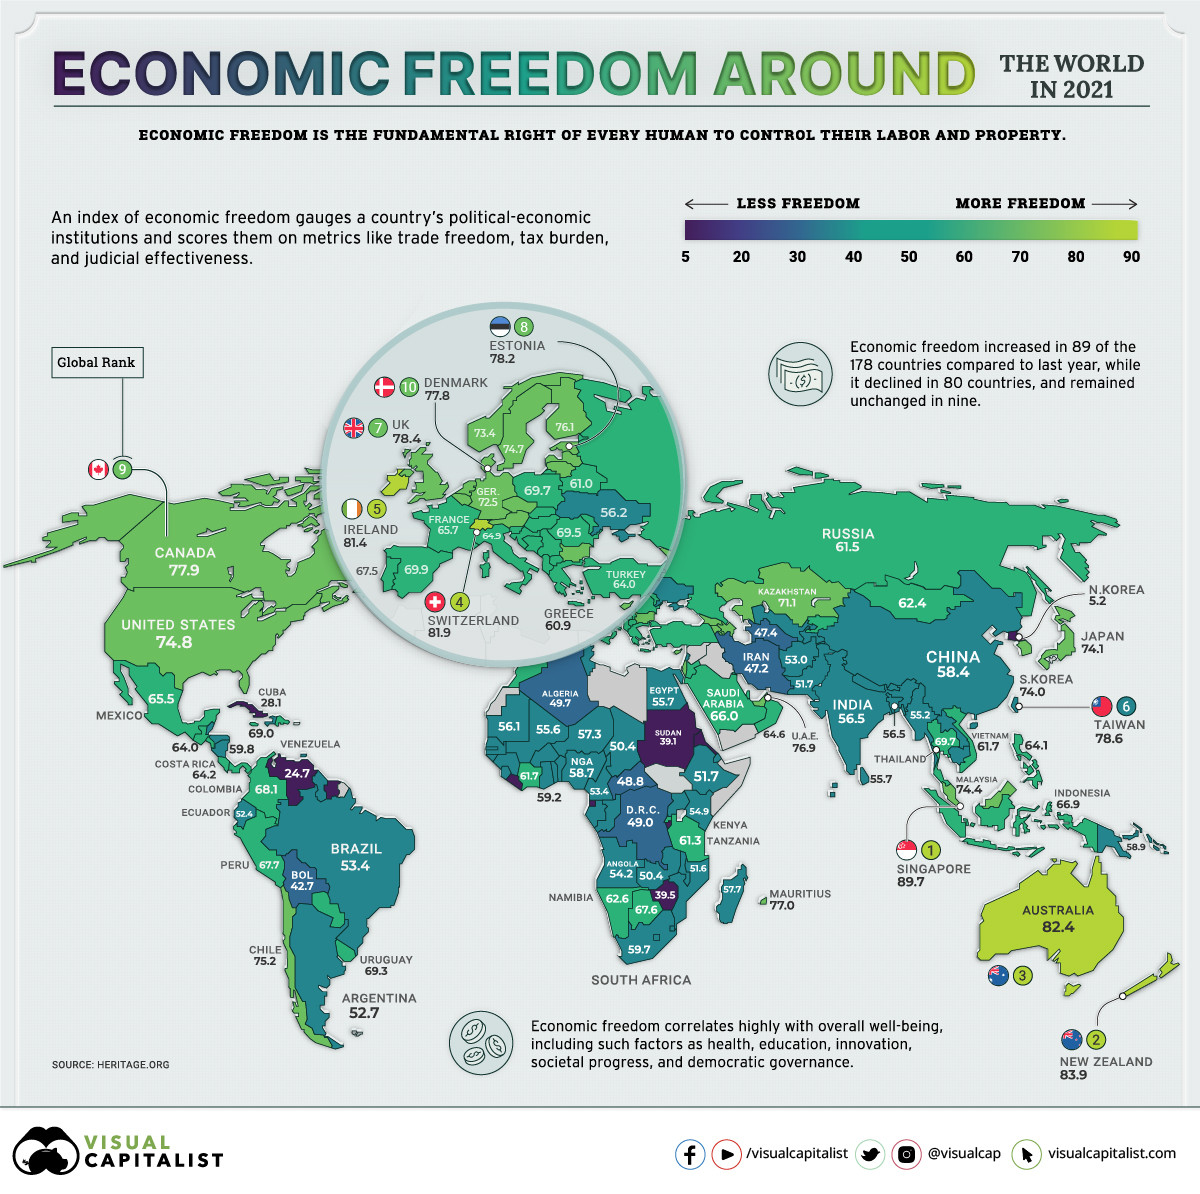 https://www.visualcapitalist.com/wp-content/uploads/2021/11/VC-OC-Economic-Freedom-Around-the-World-in-2021.jpg